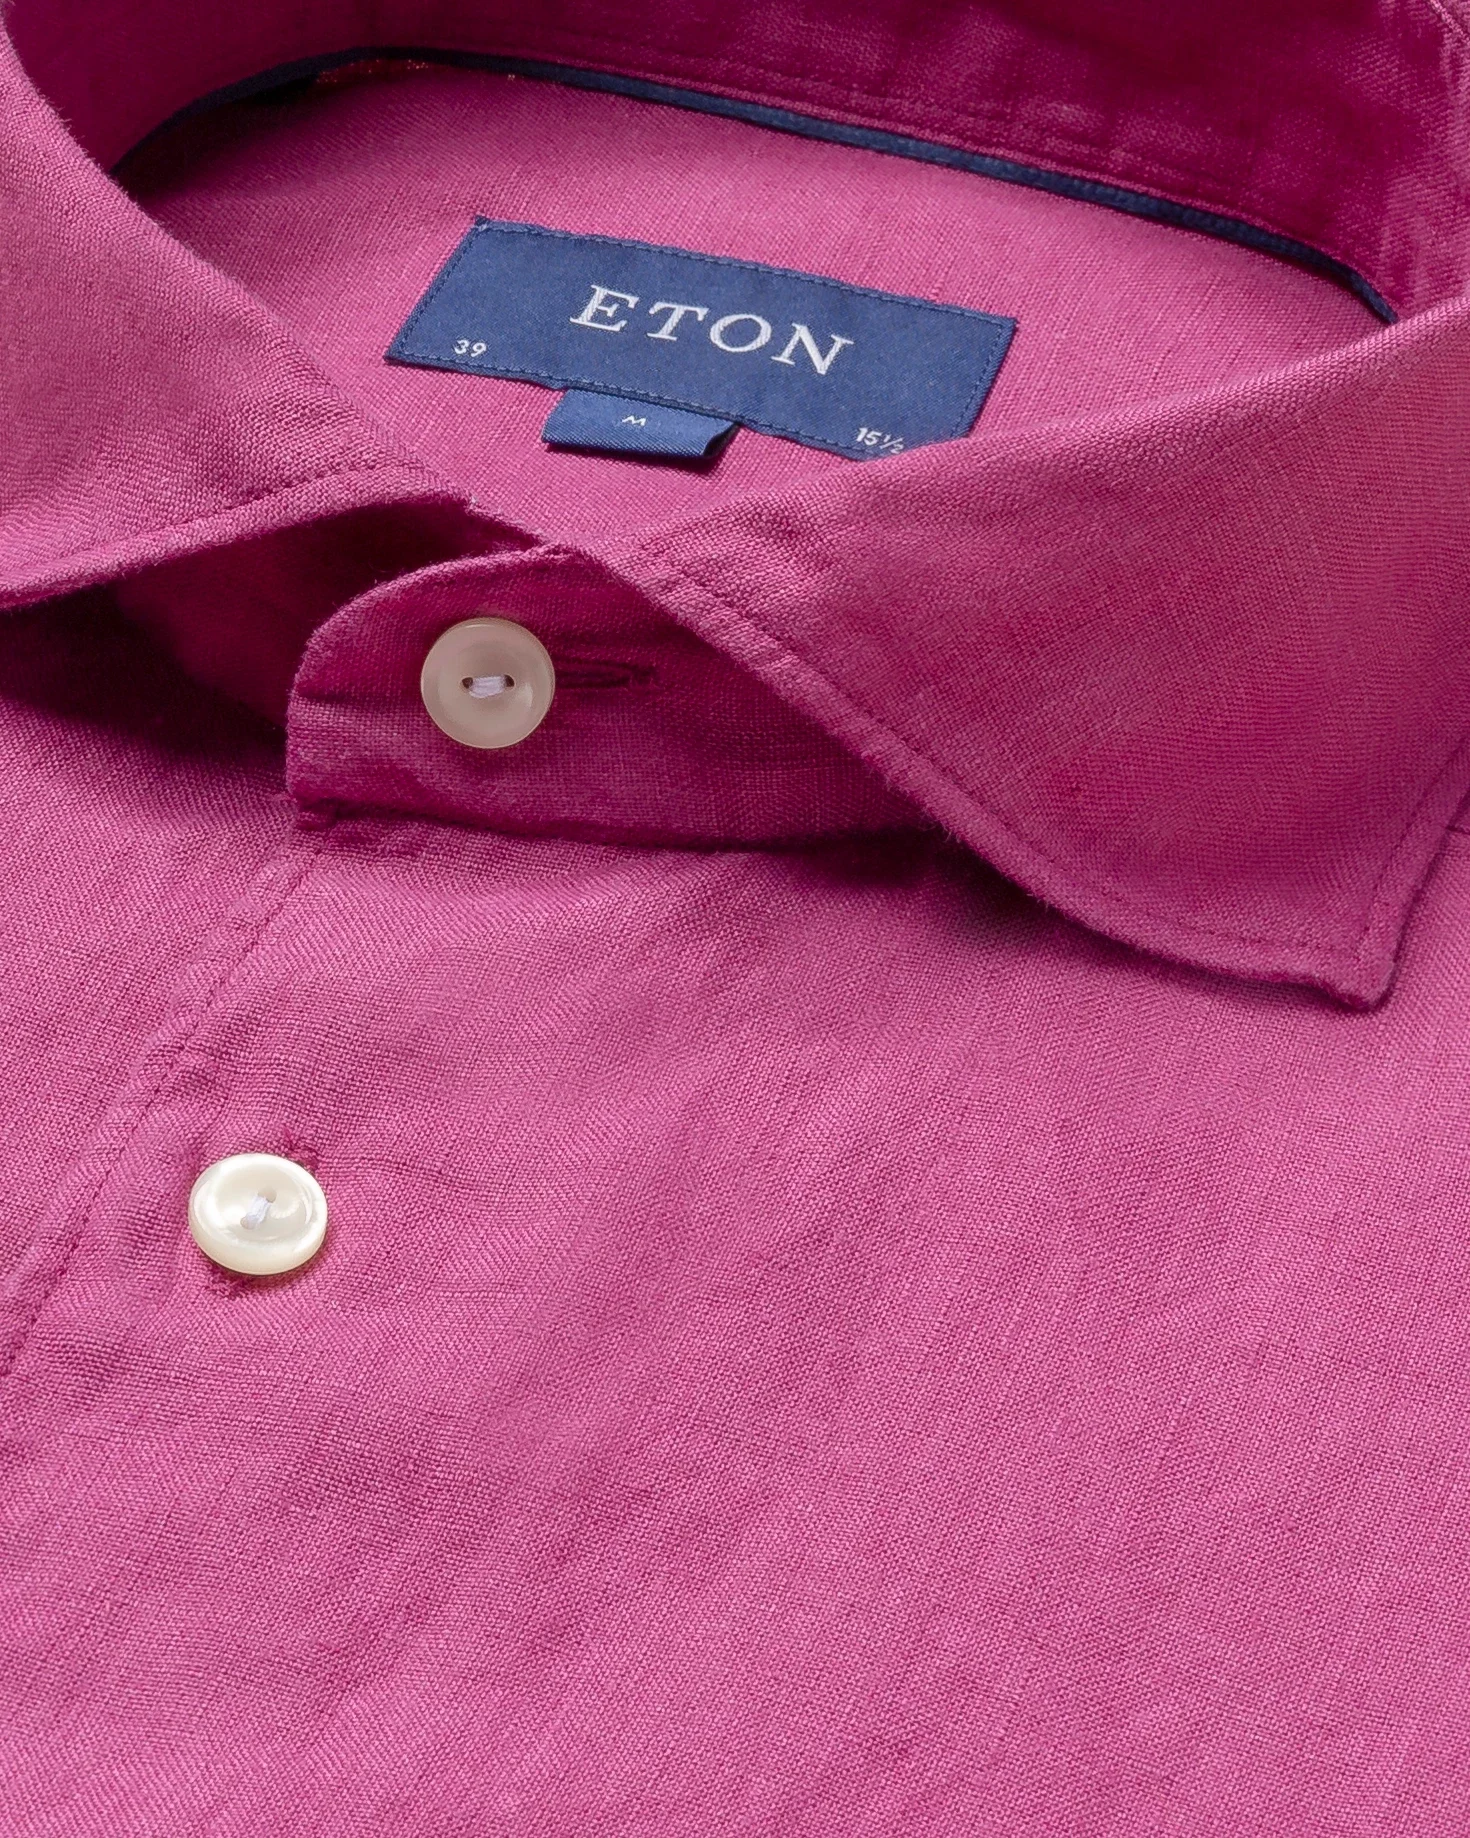 Eton - burgundy linen shirt soft